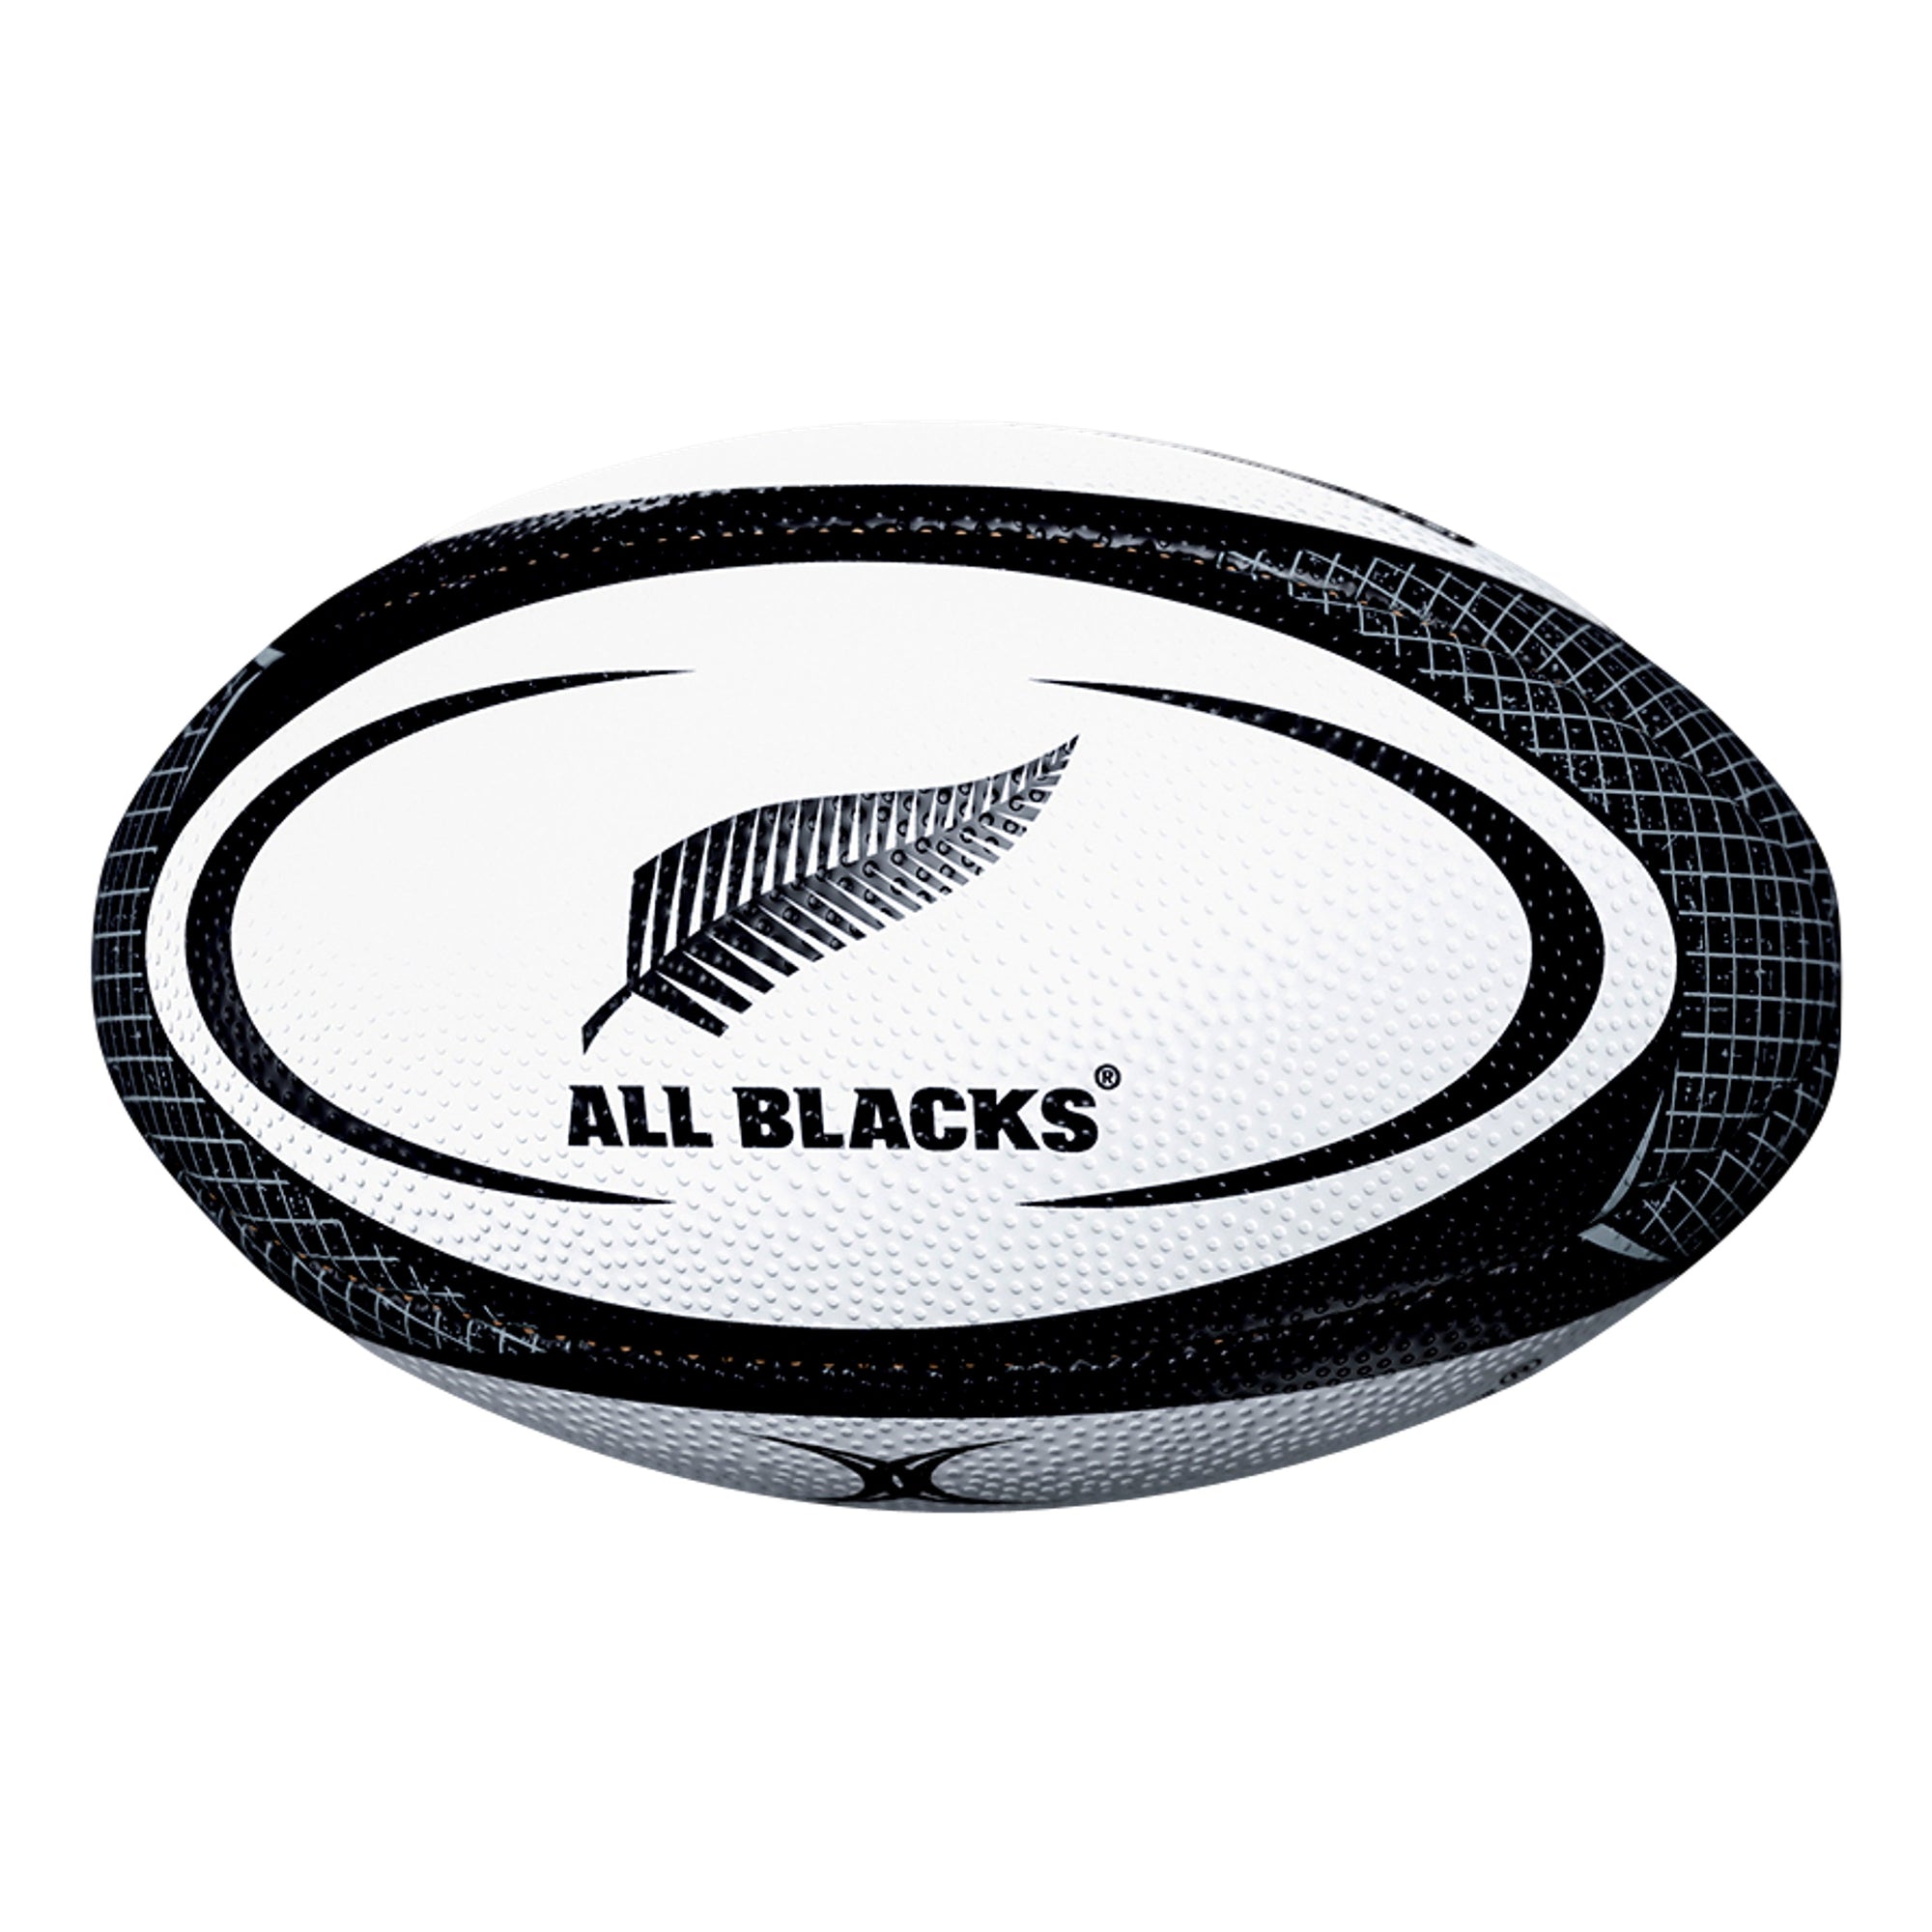 Rugby Imports Gilbert New Zealand All Blacks Mini Replica Ball